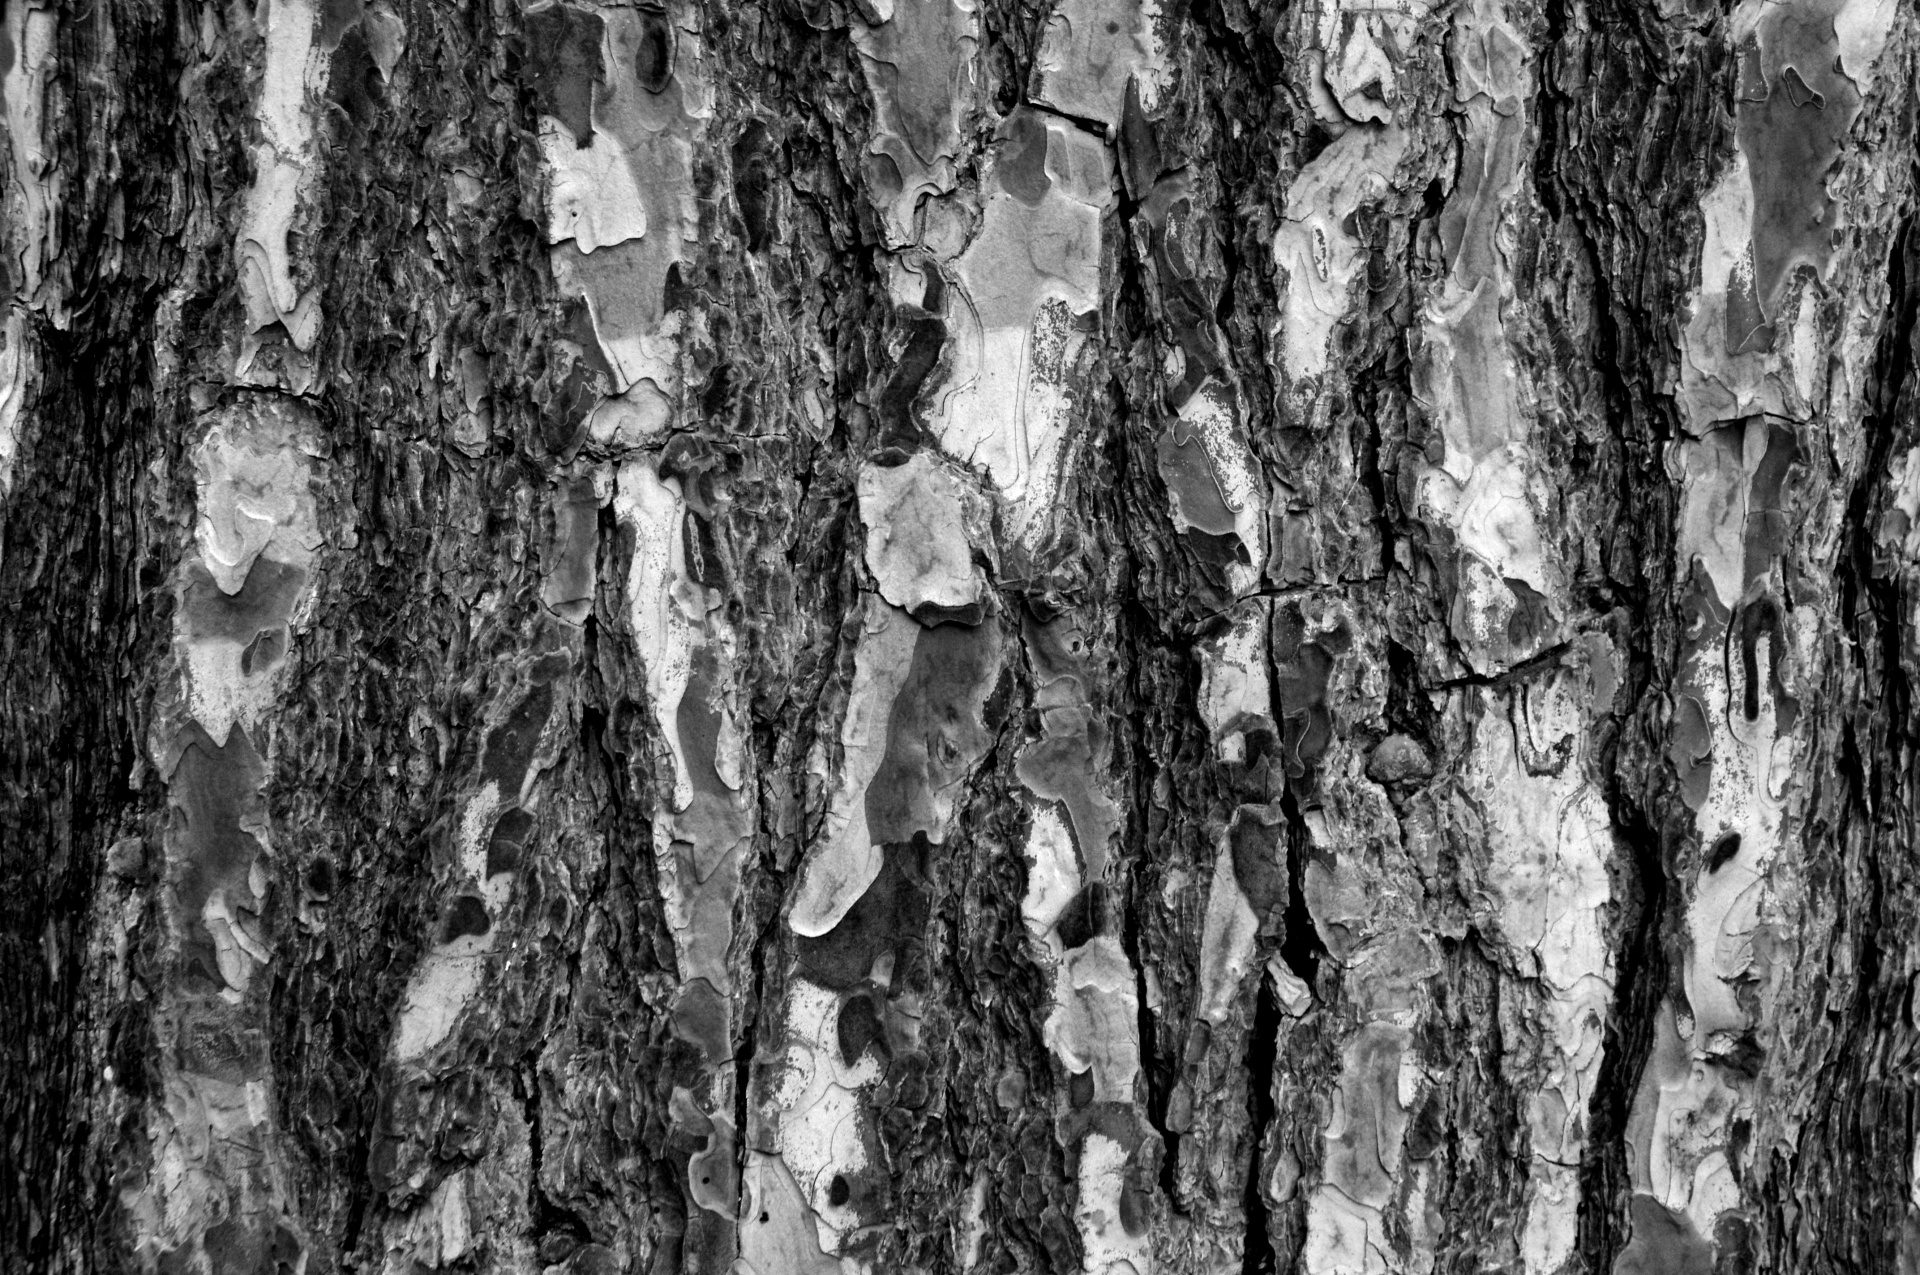 Pine tree textured bark background